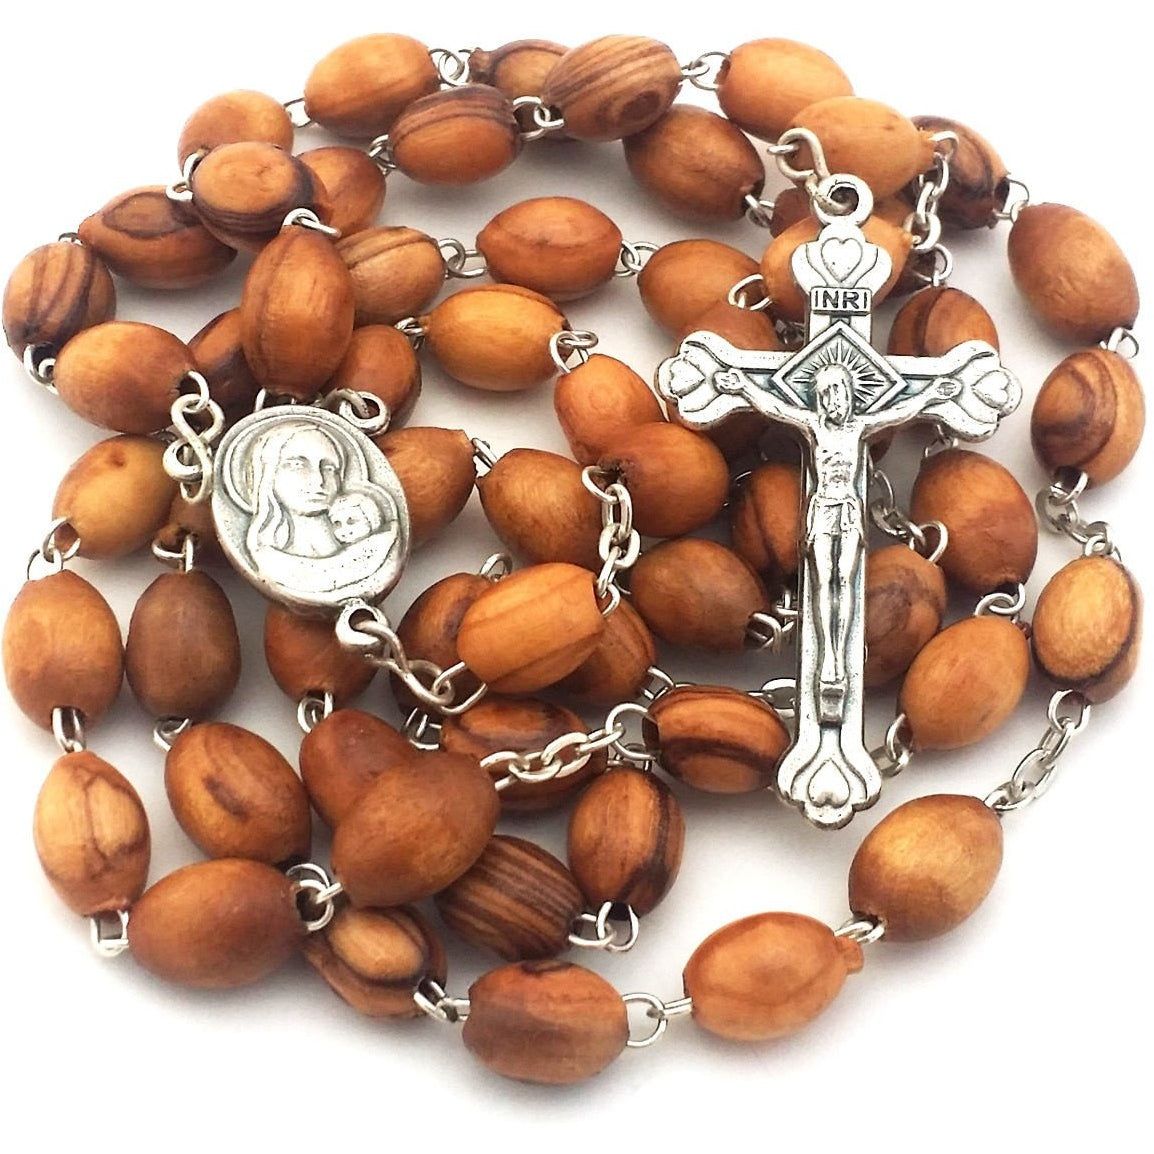 Universal Jesus Cross Catholic Metal Cross Rosary Pendant, Diy